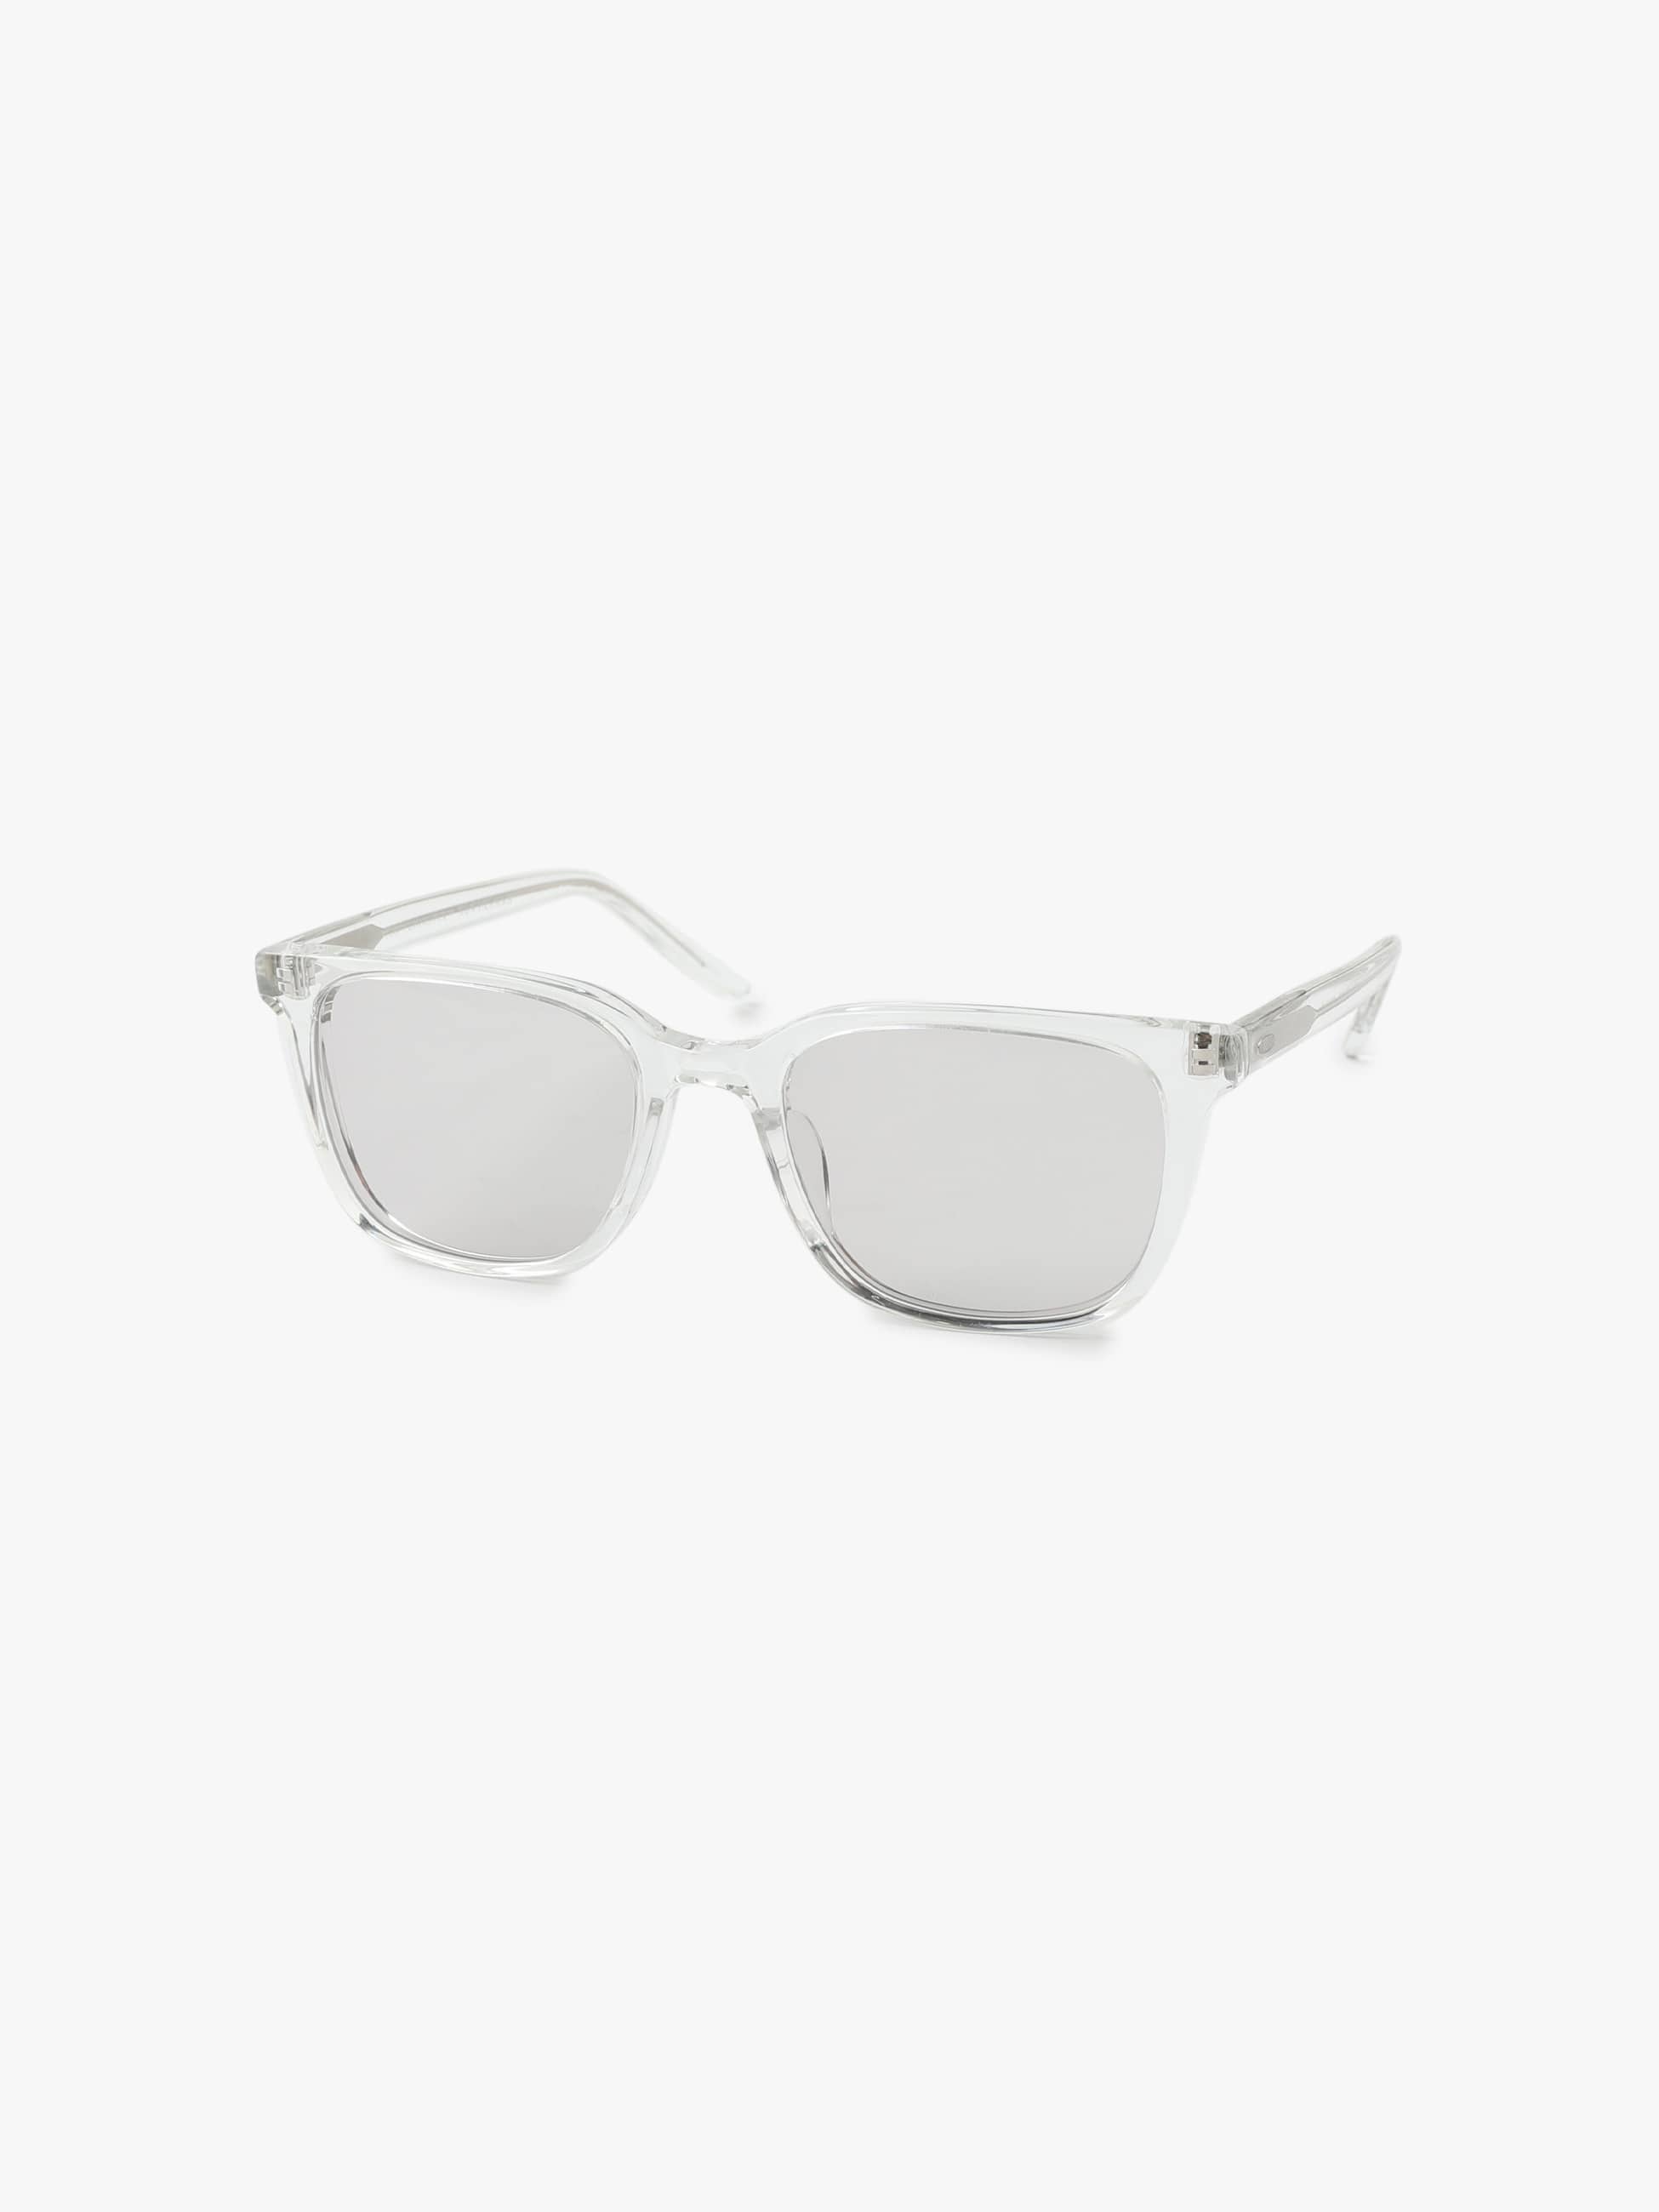 Joe Clear Frame Sunglasses